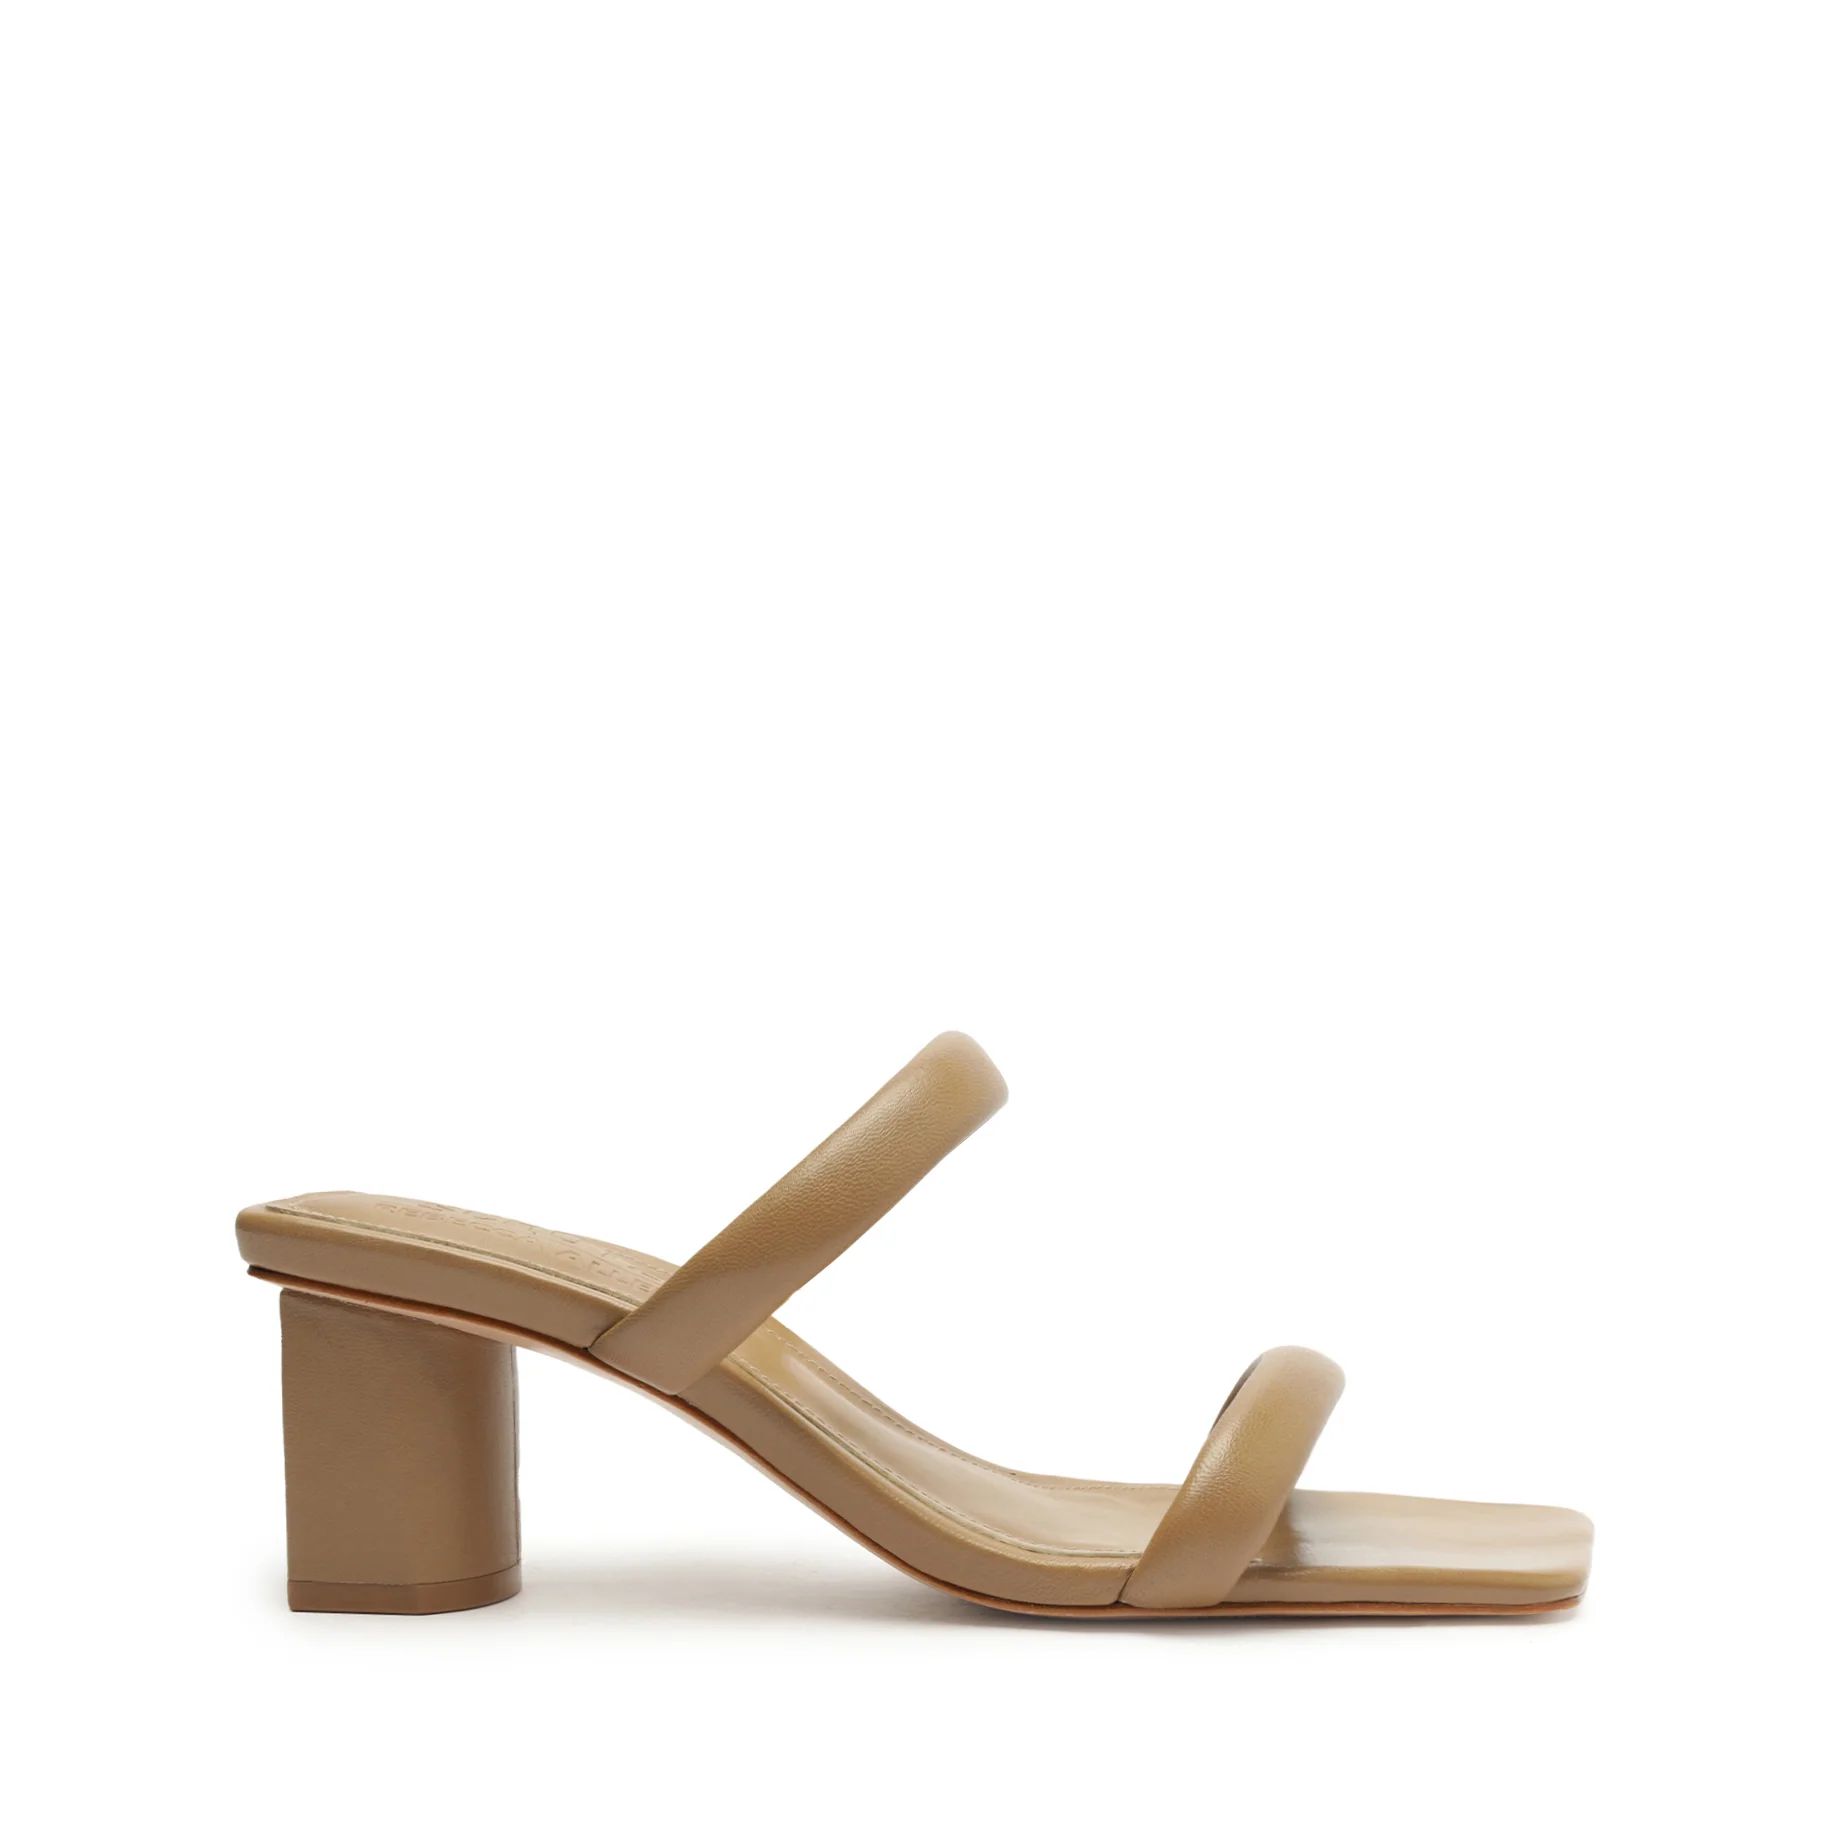 Ully Lo Rebecca Allen Nappa Leather Sandal | Schutz Shoes (US)